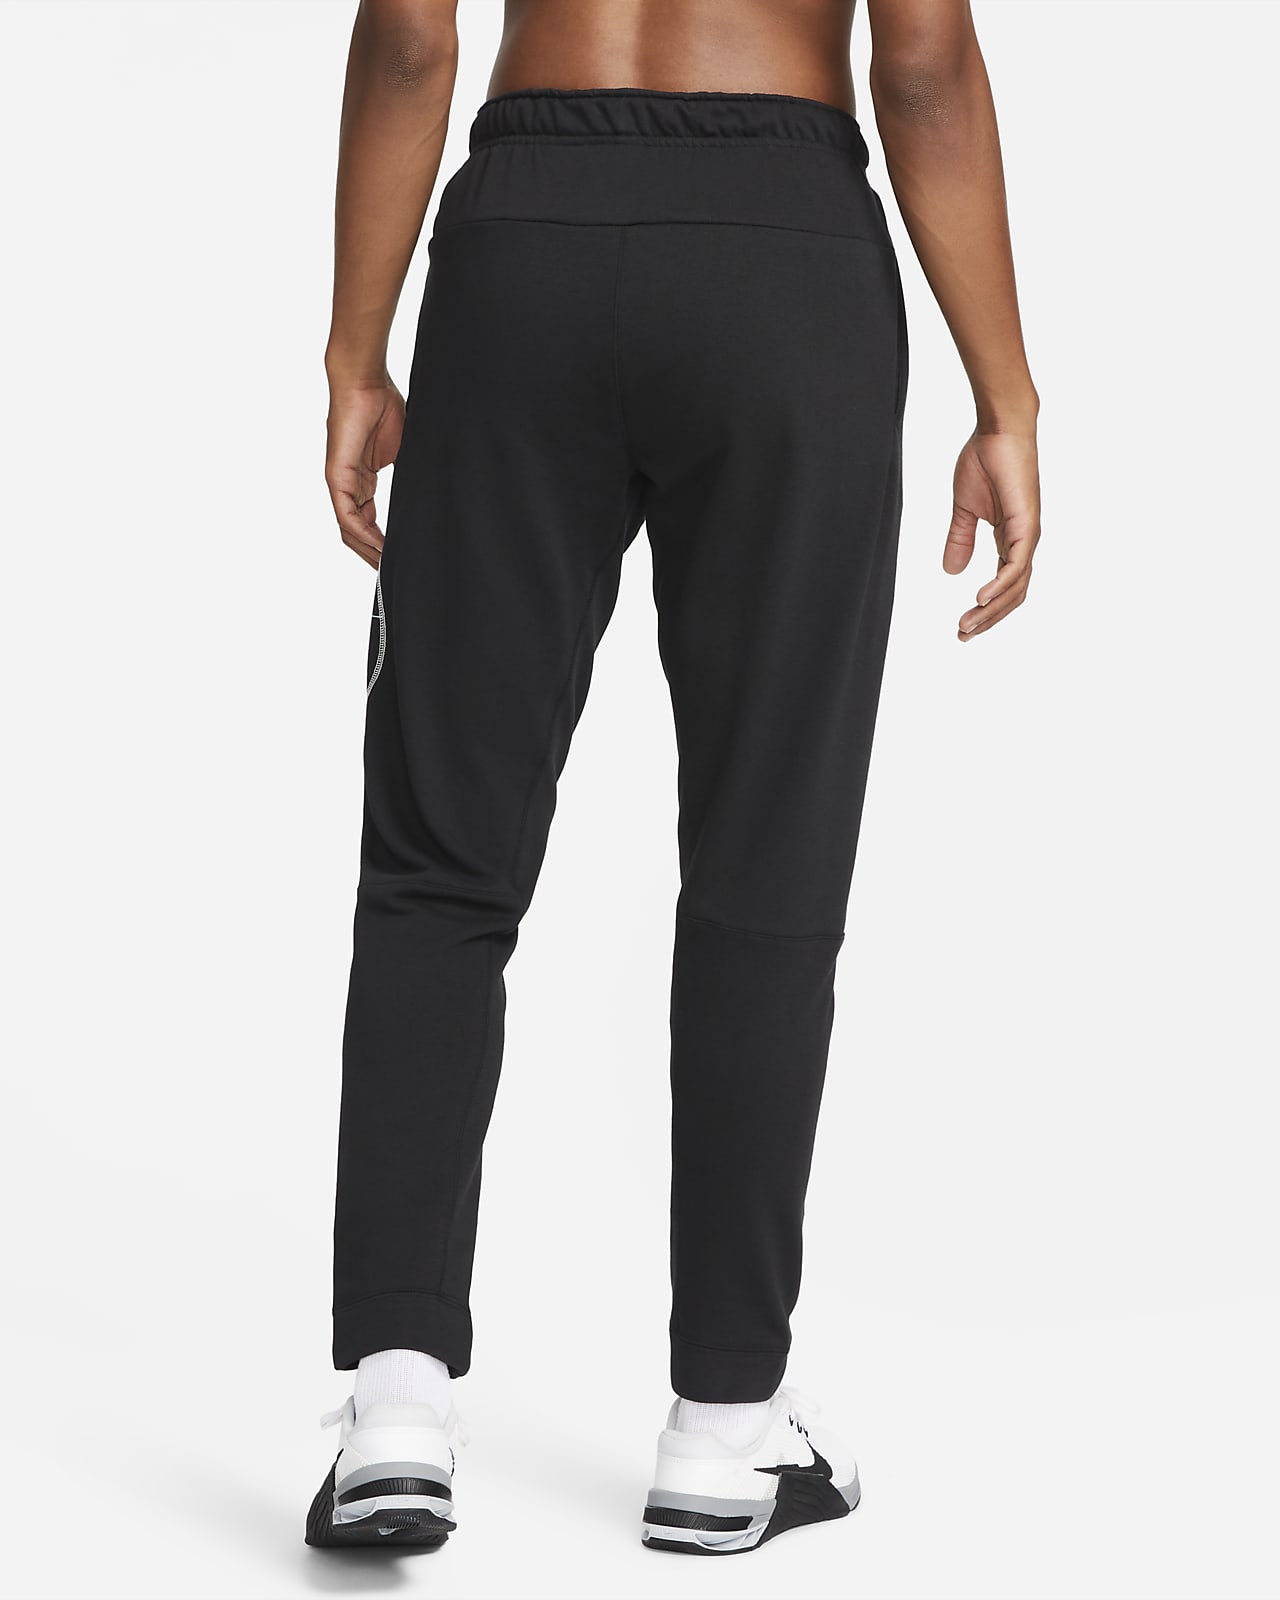 Pantalón Dri-FIT Nike Hombre